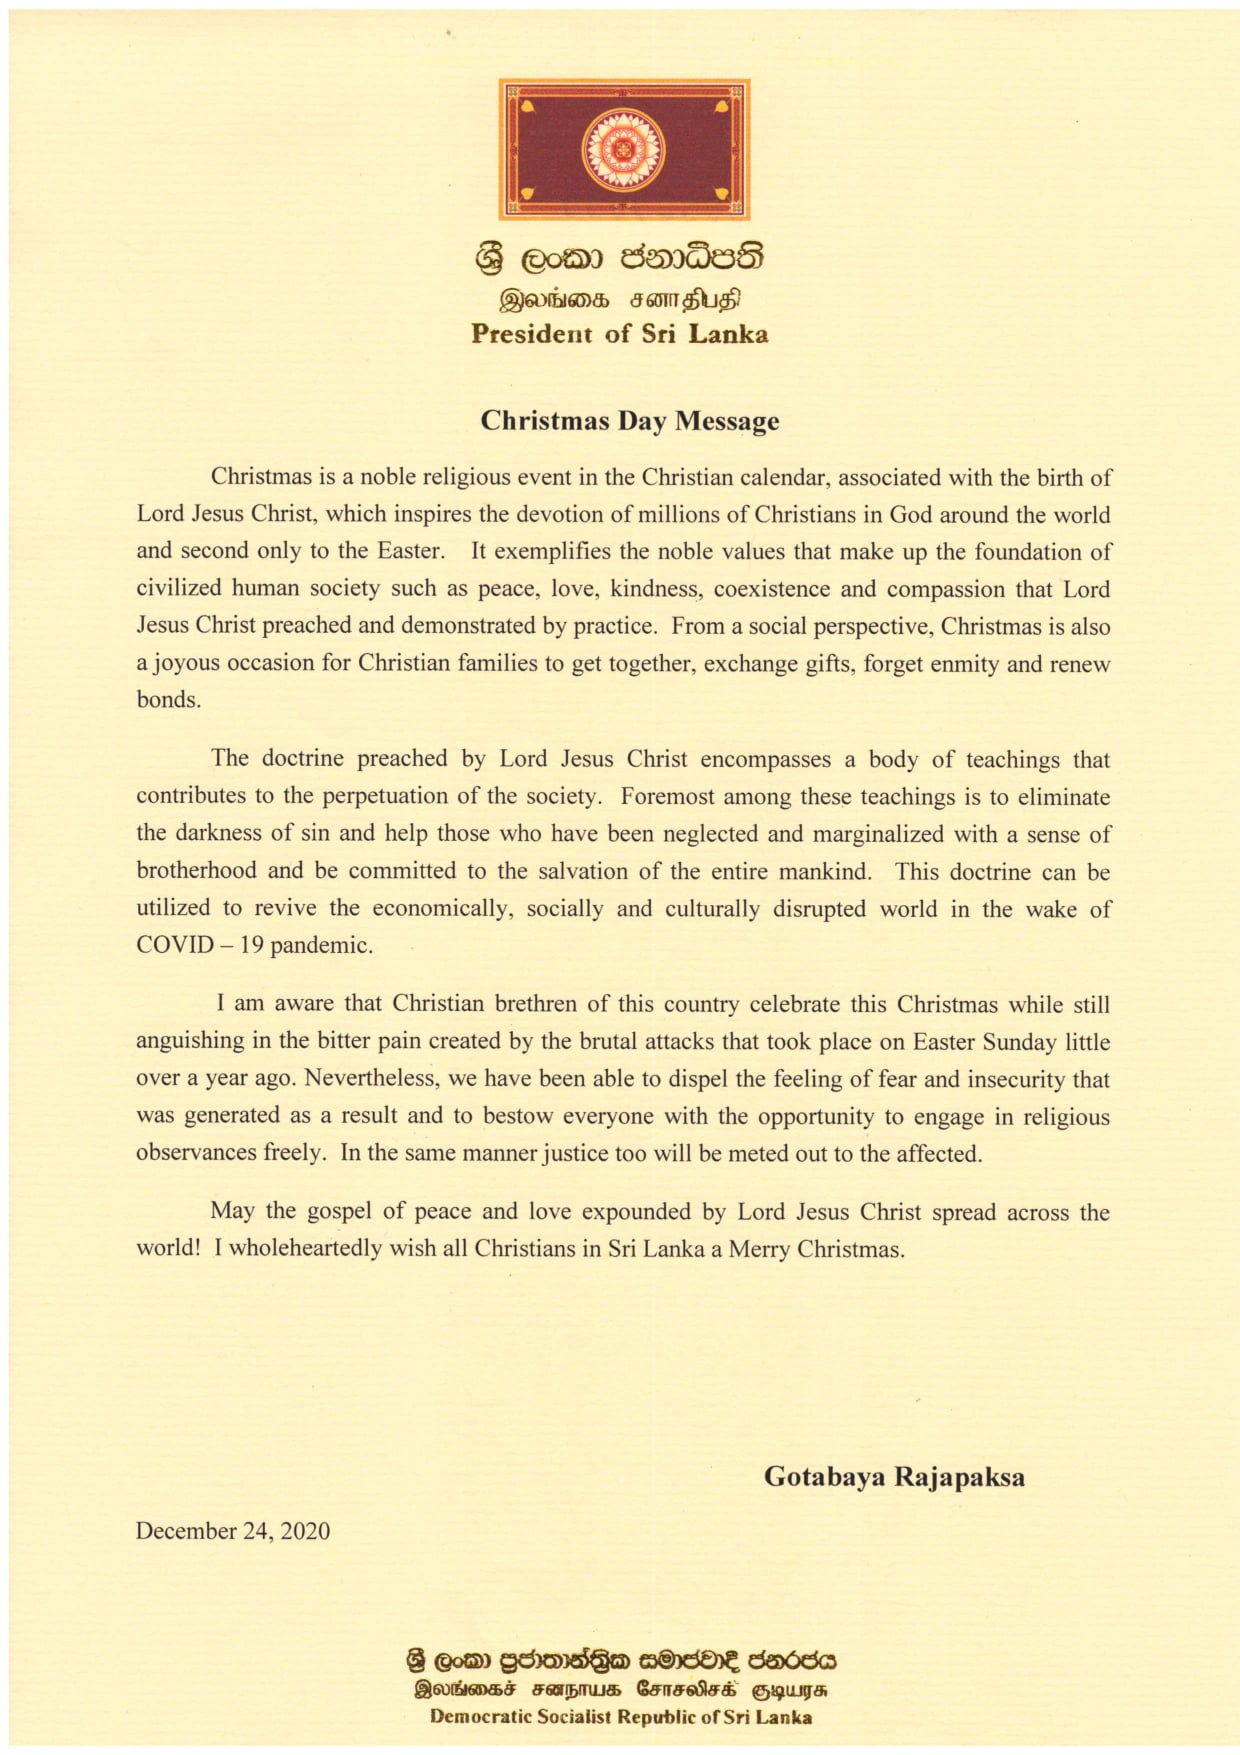 Christmas Day Message of H.E. the President Gotabaya Rajapaksa